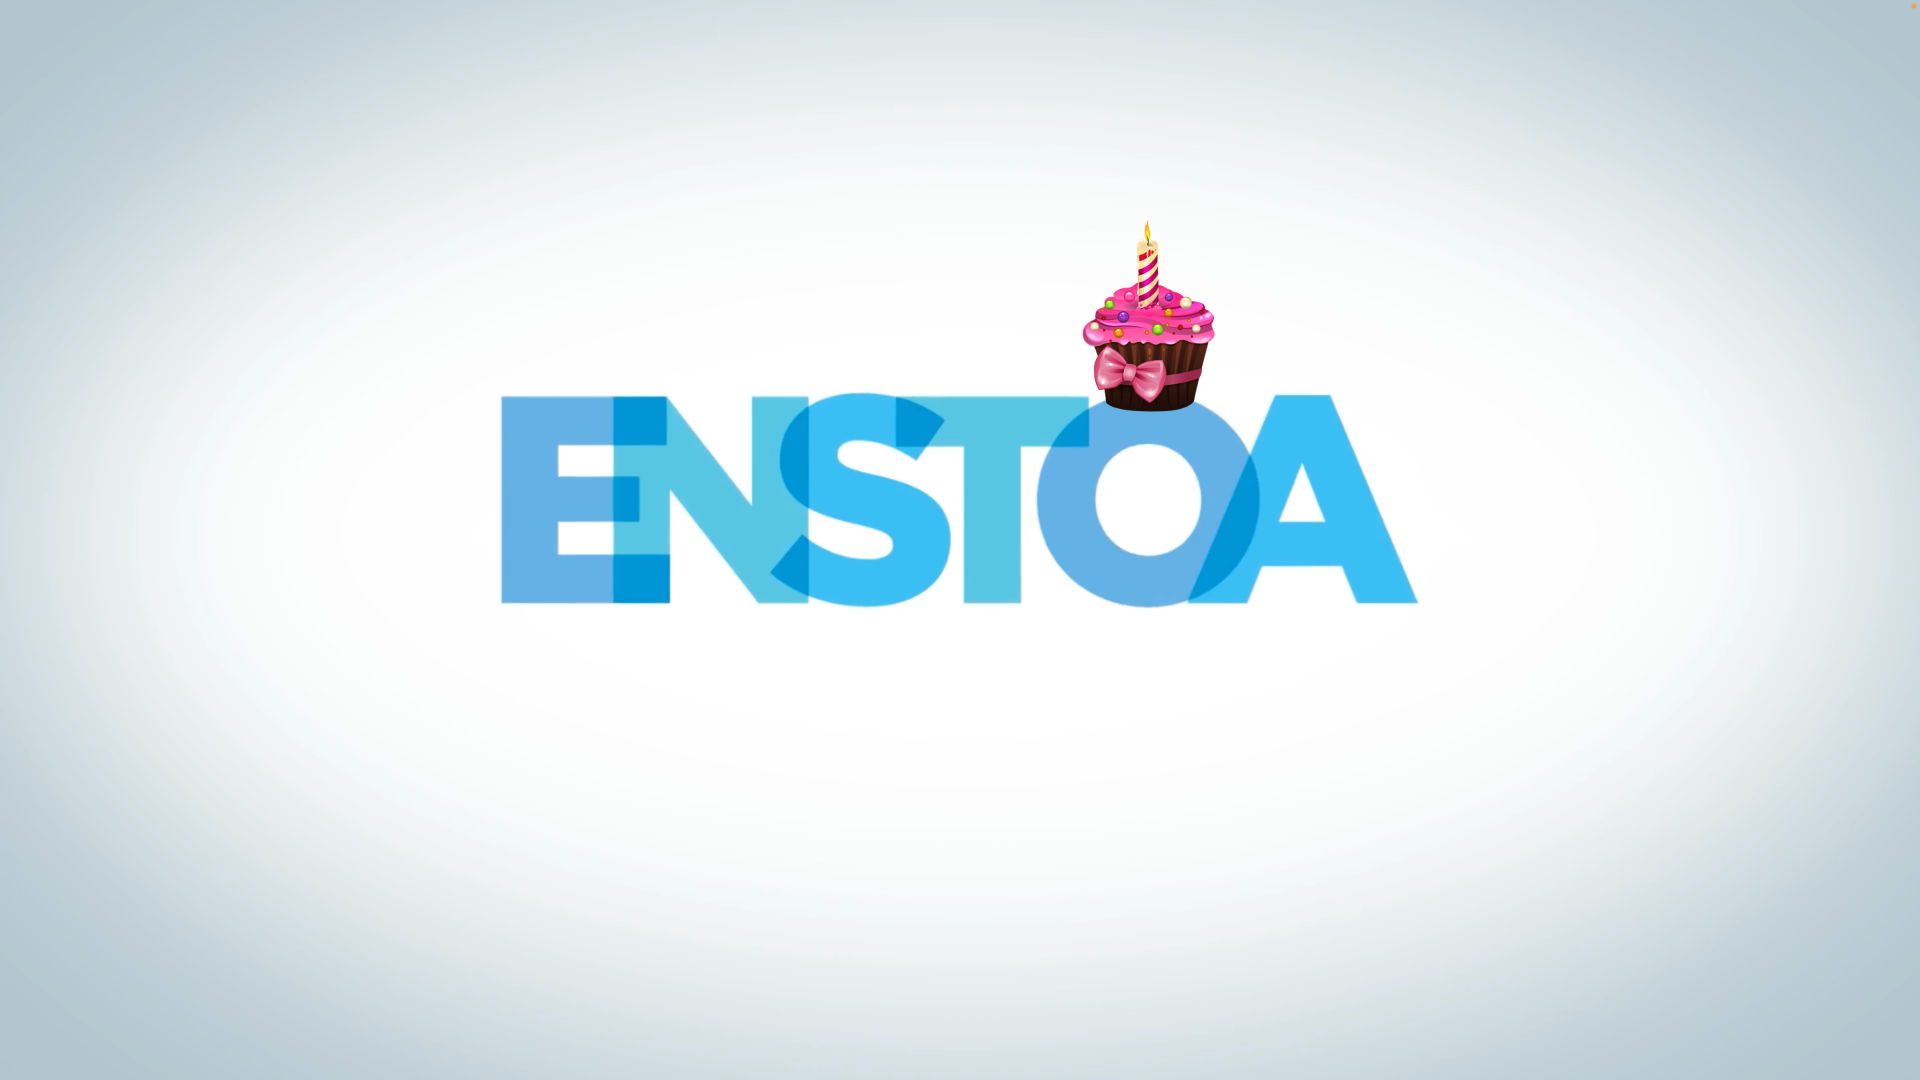 Enstoa Celebrates 15 Years